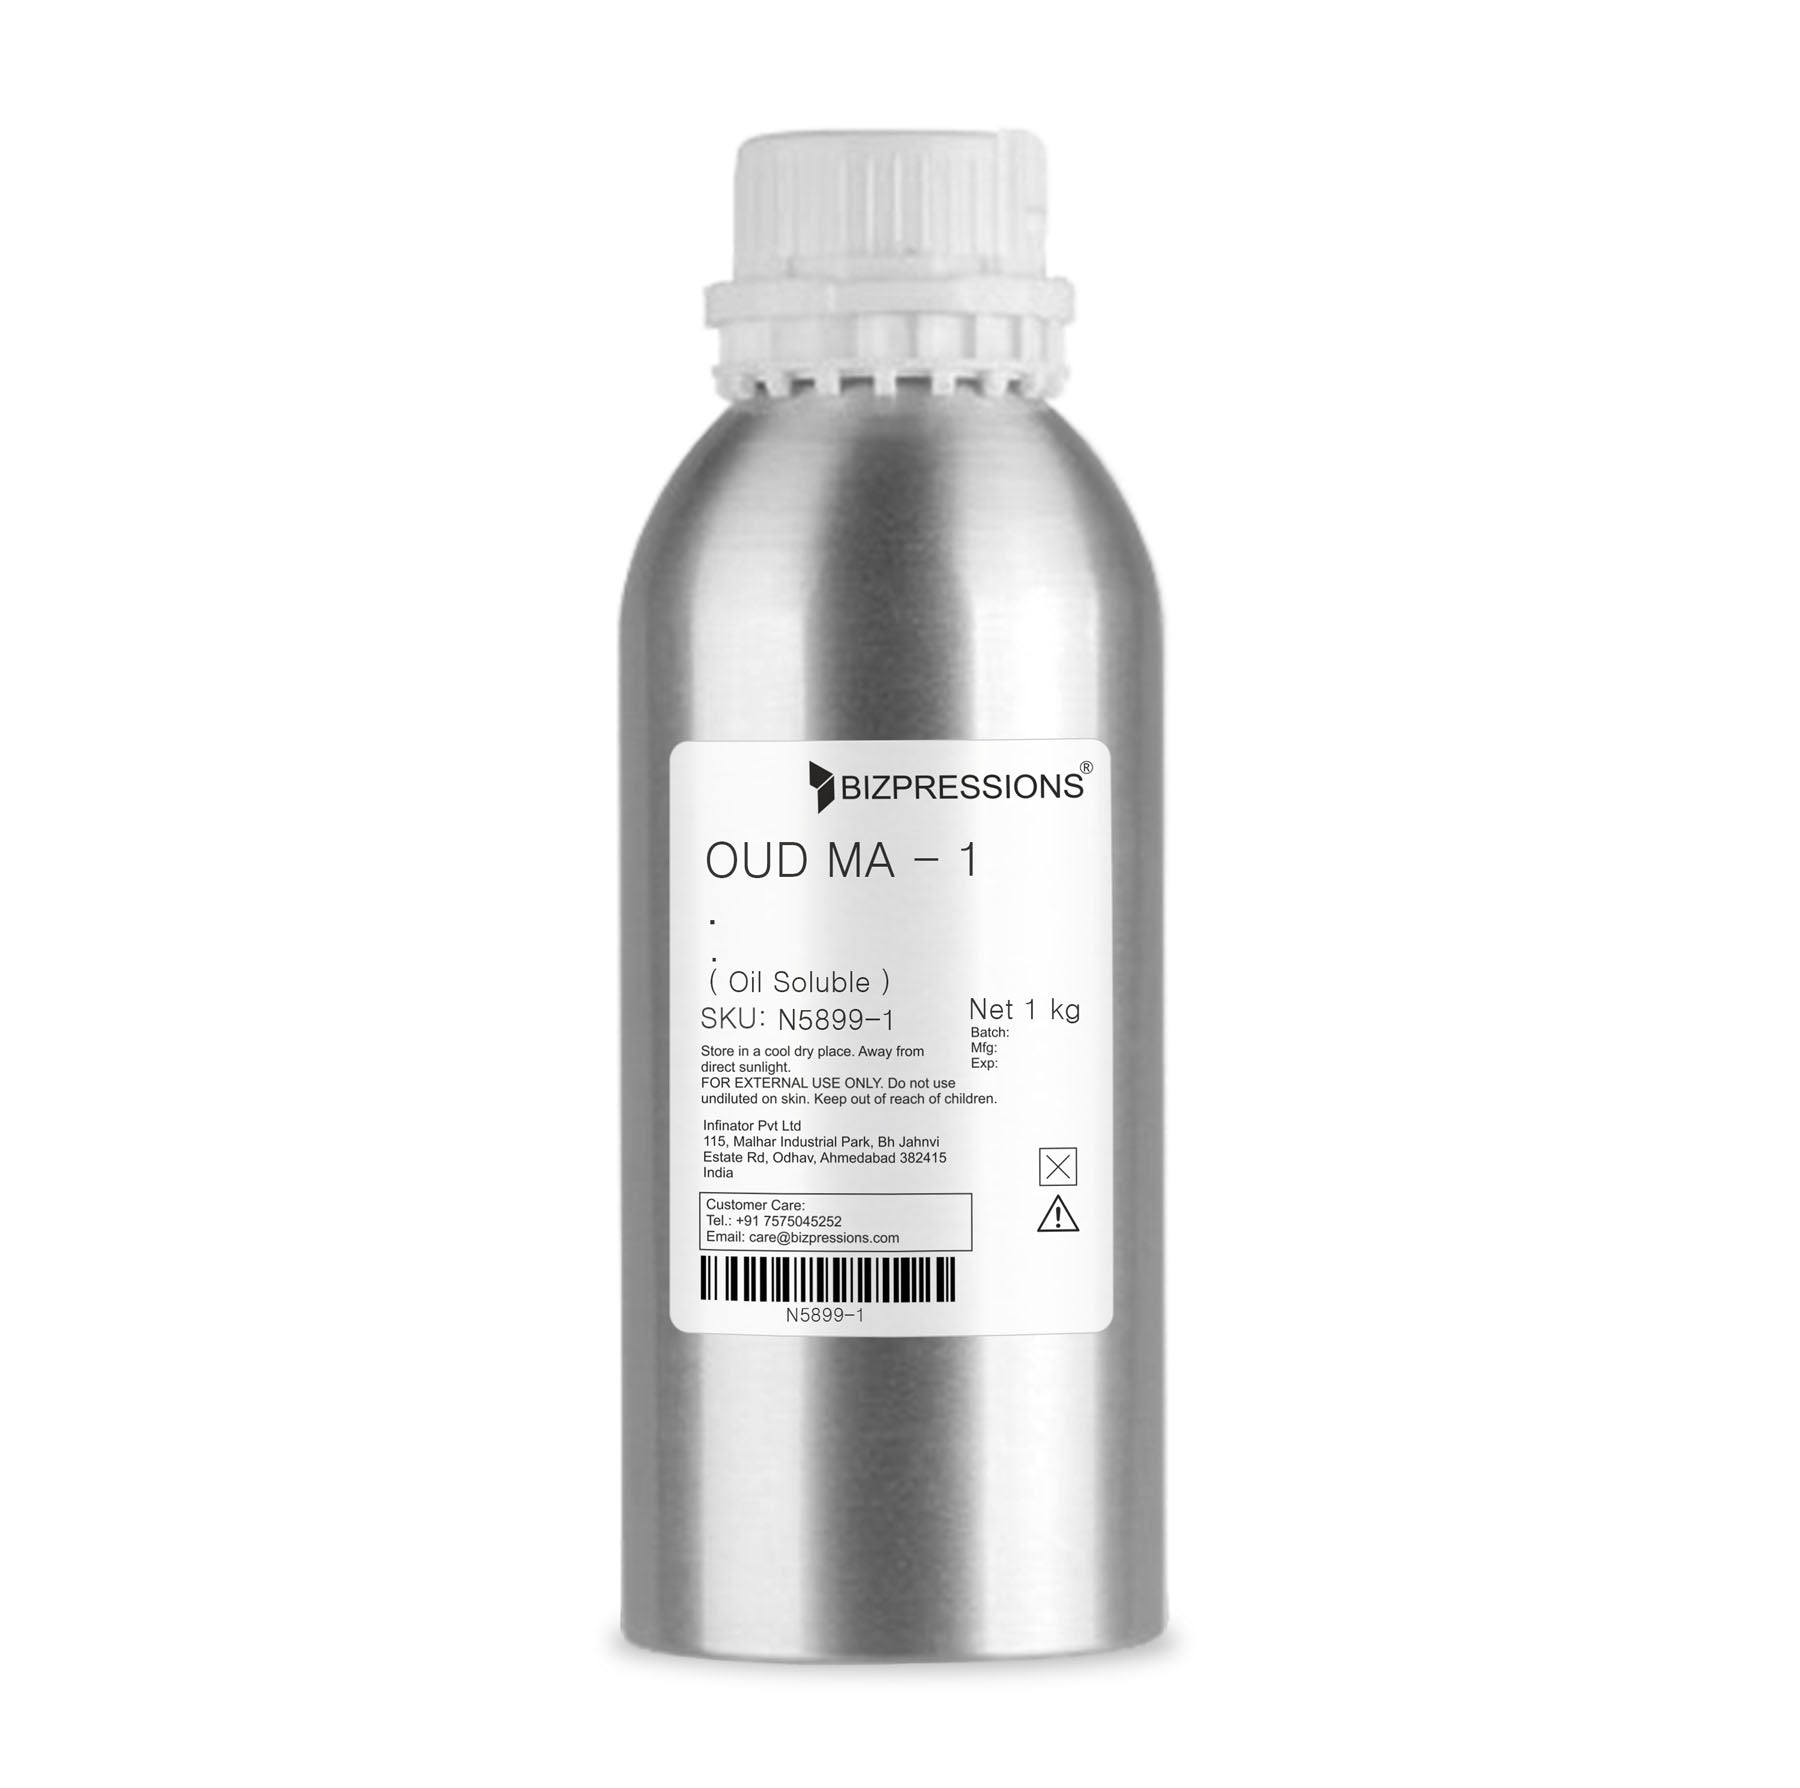 OUD MA - 1 - Fragrance ( Oil Soluble ) - 1 kg